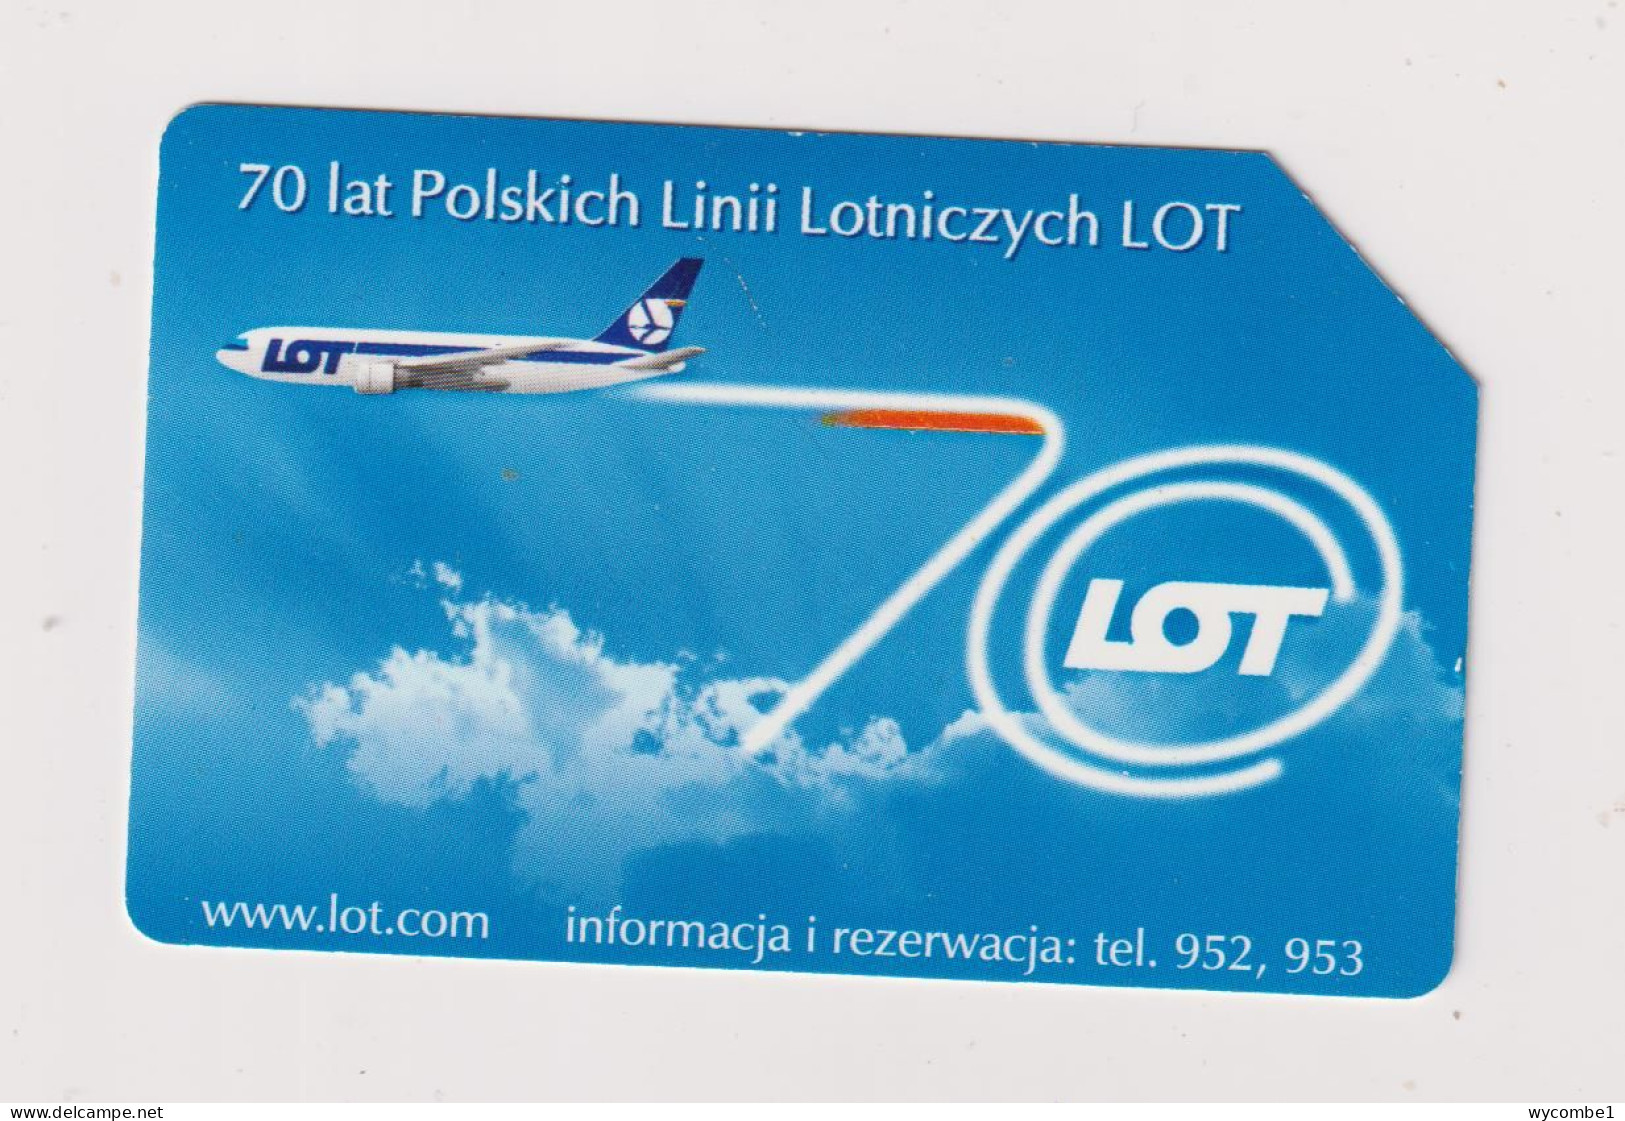 POLAND  - Lot Airline Urmet Phonecard - Poland